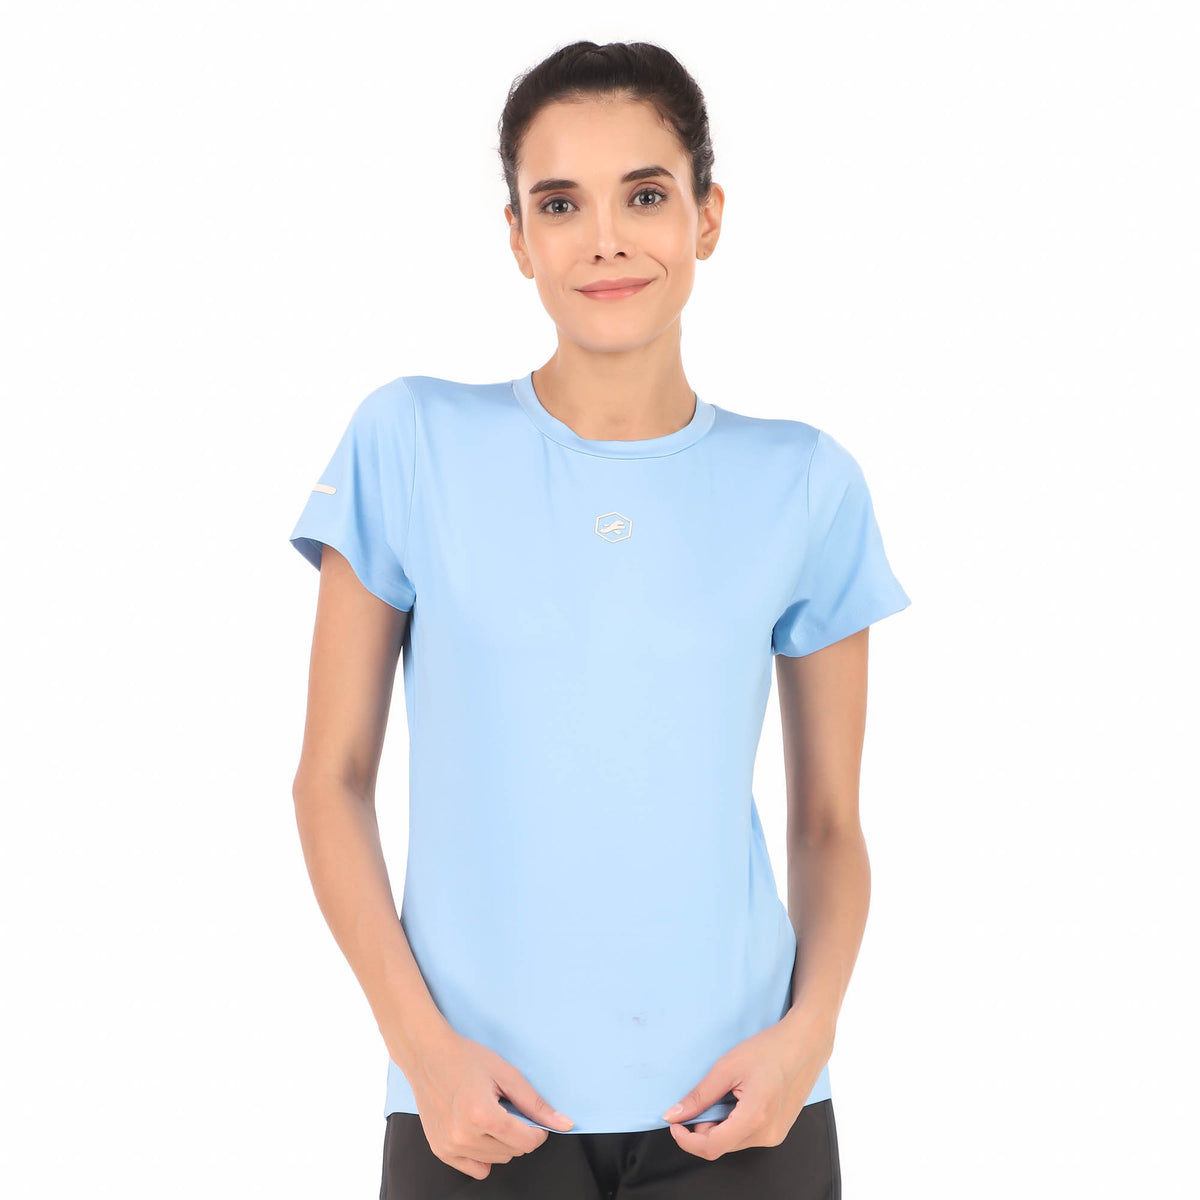 Multiverse Performance Tshirt For Women (Blizzard Blue)